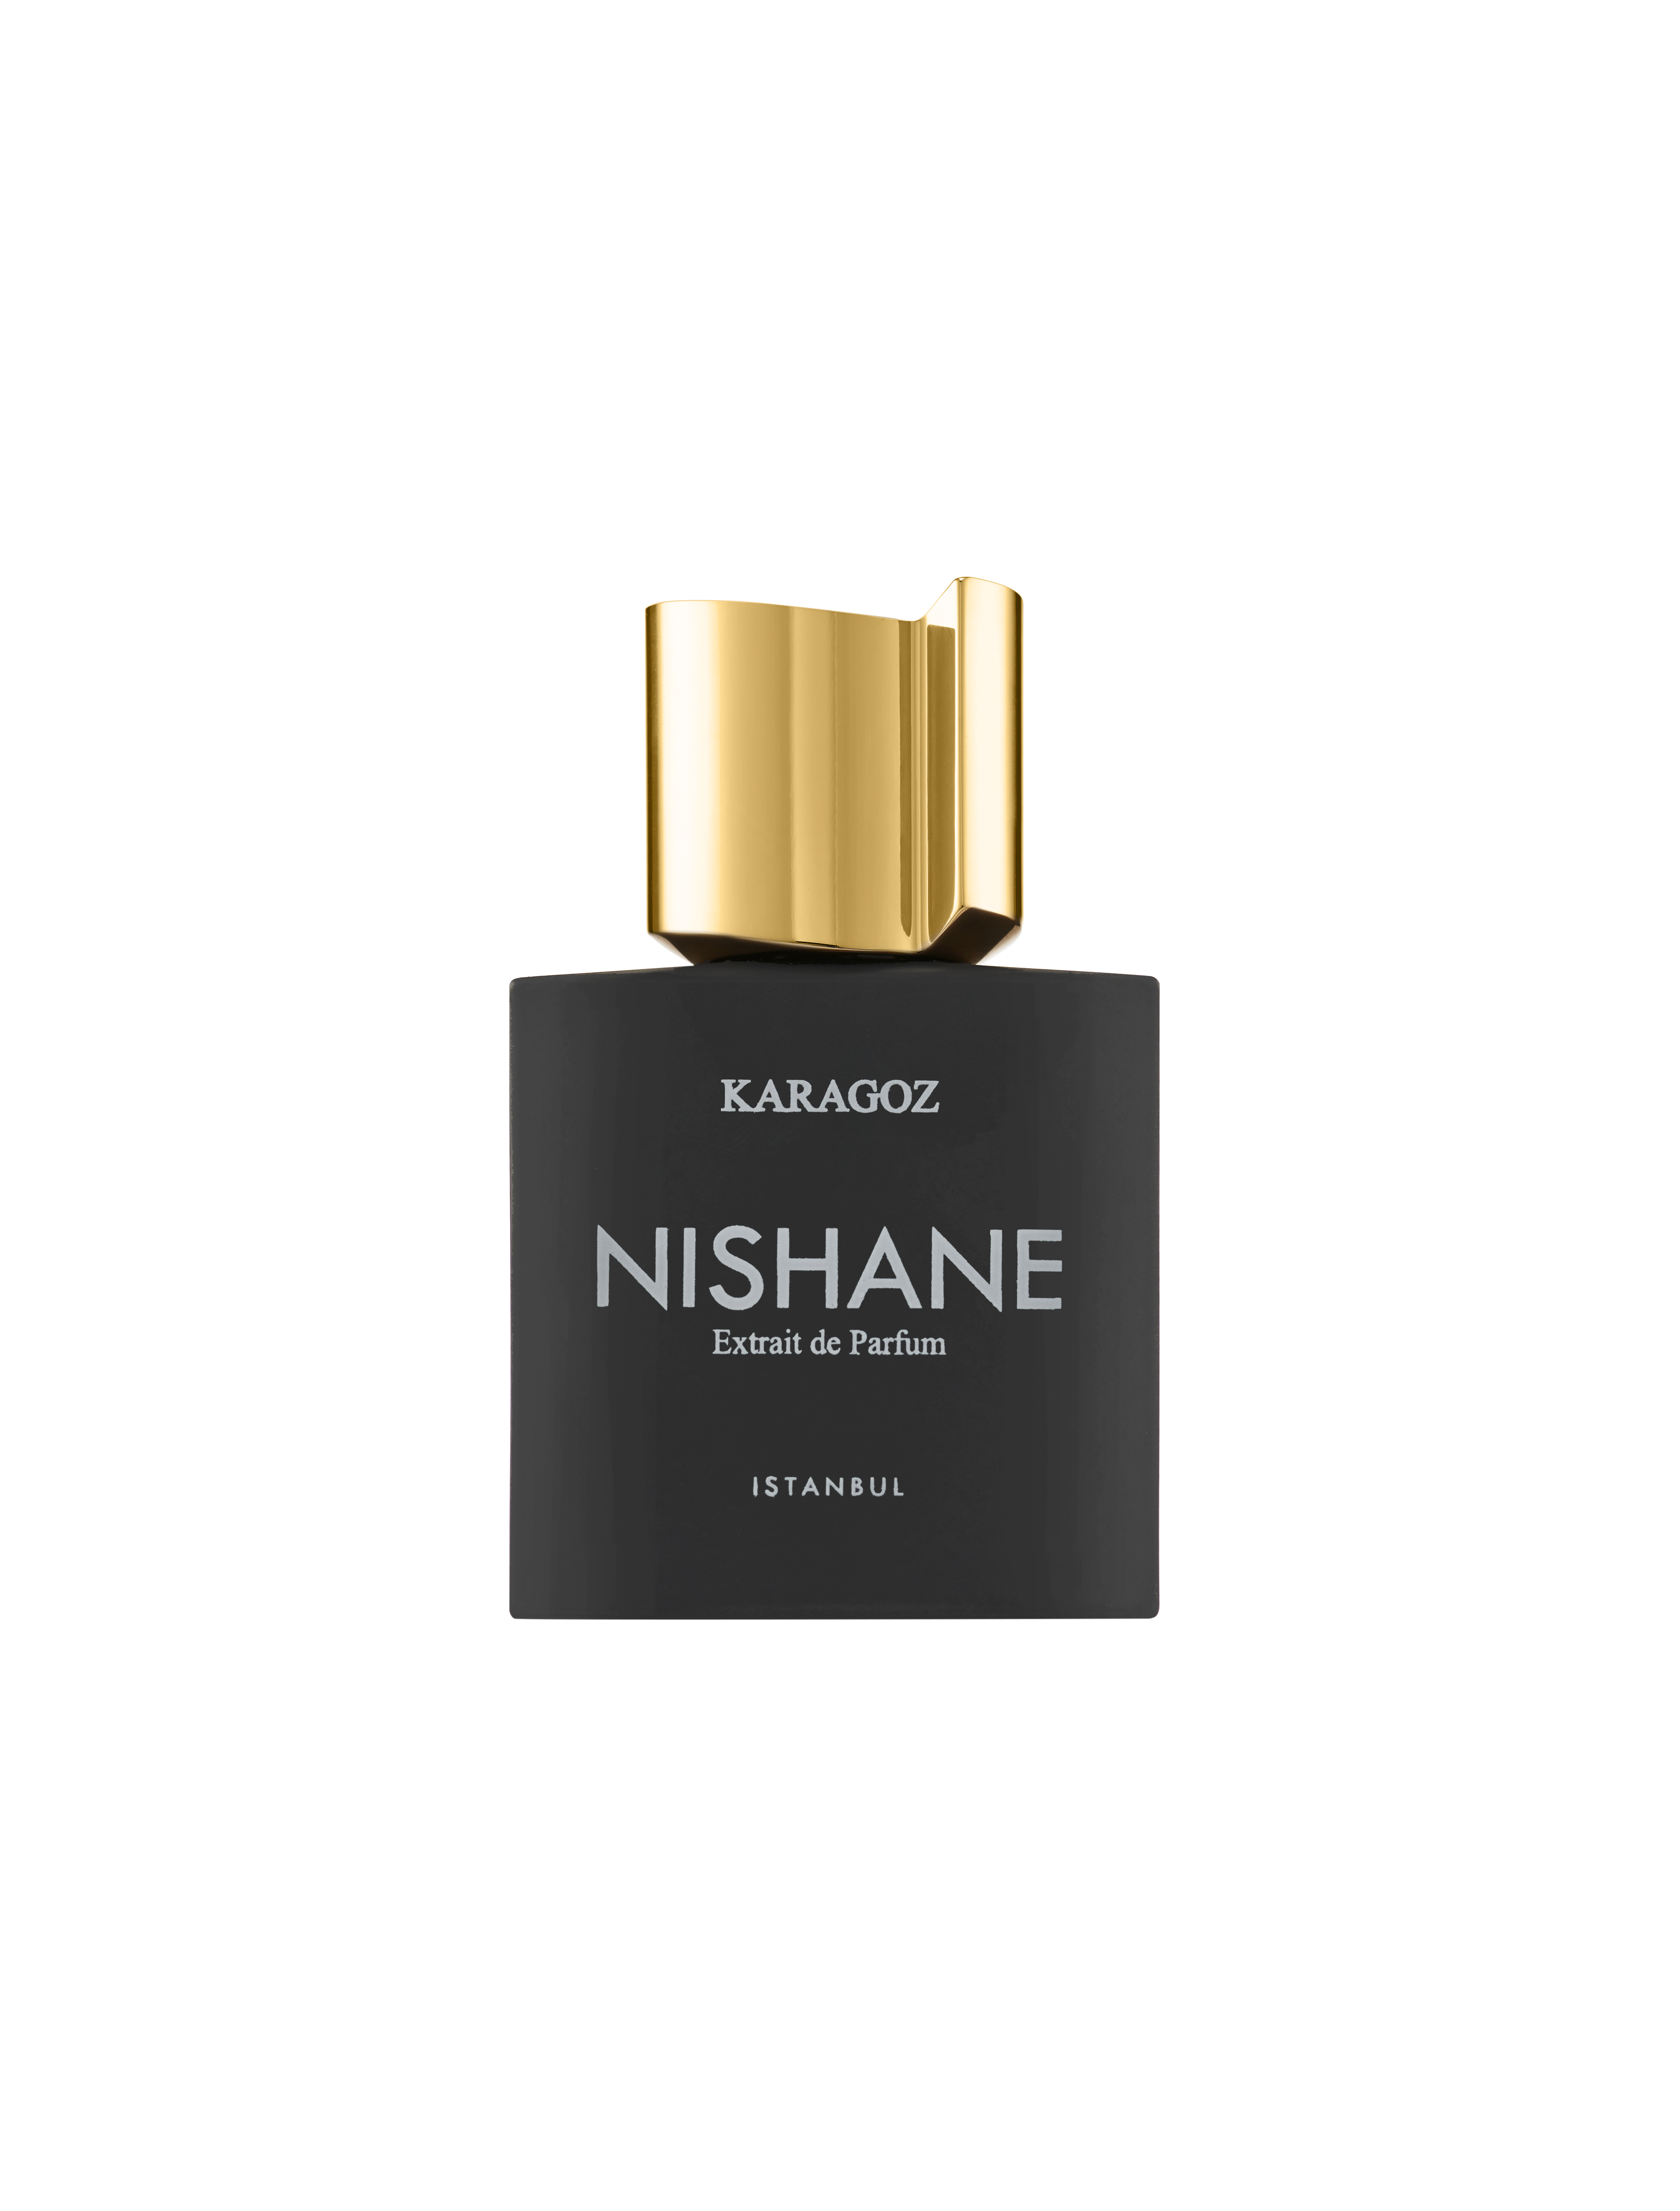 Nishane - Karagoz - Extrait de Parfum 50 ml